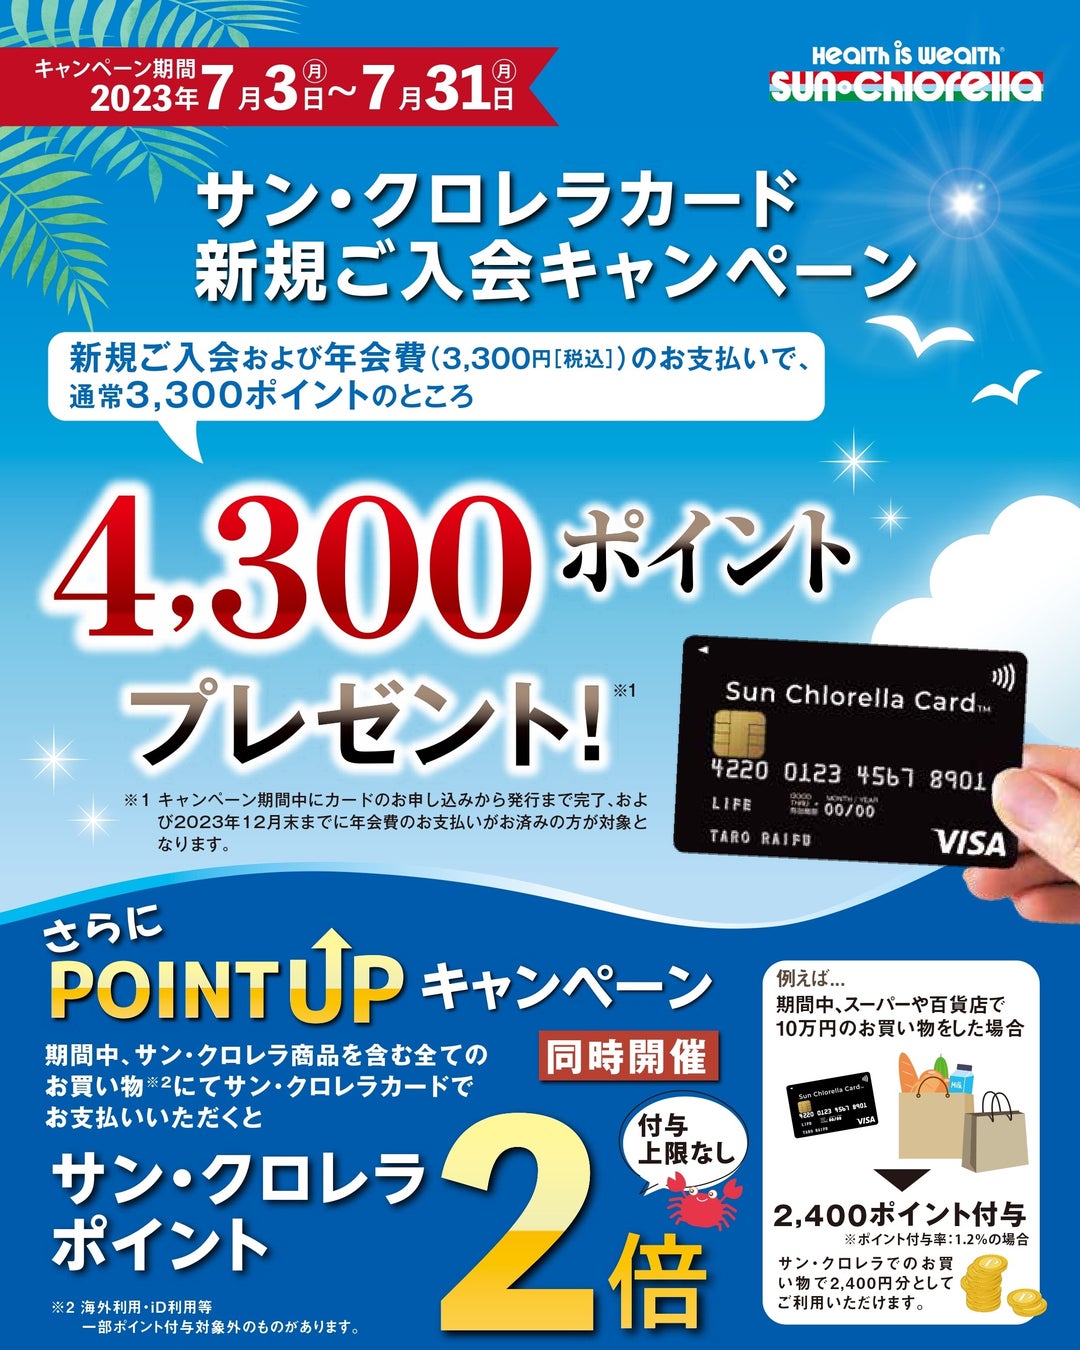 Sun Chlorella Card ポイント2倍キャンペーン実施！